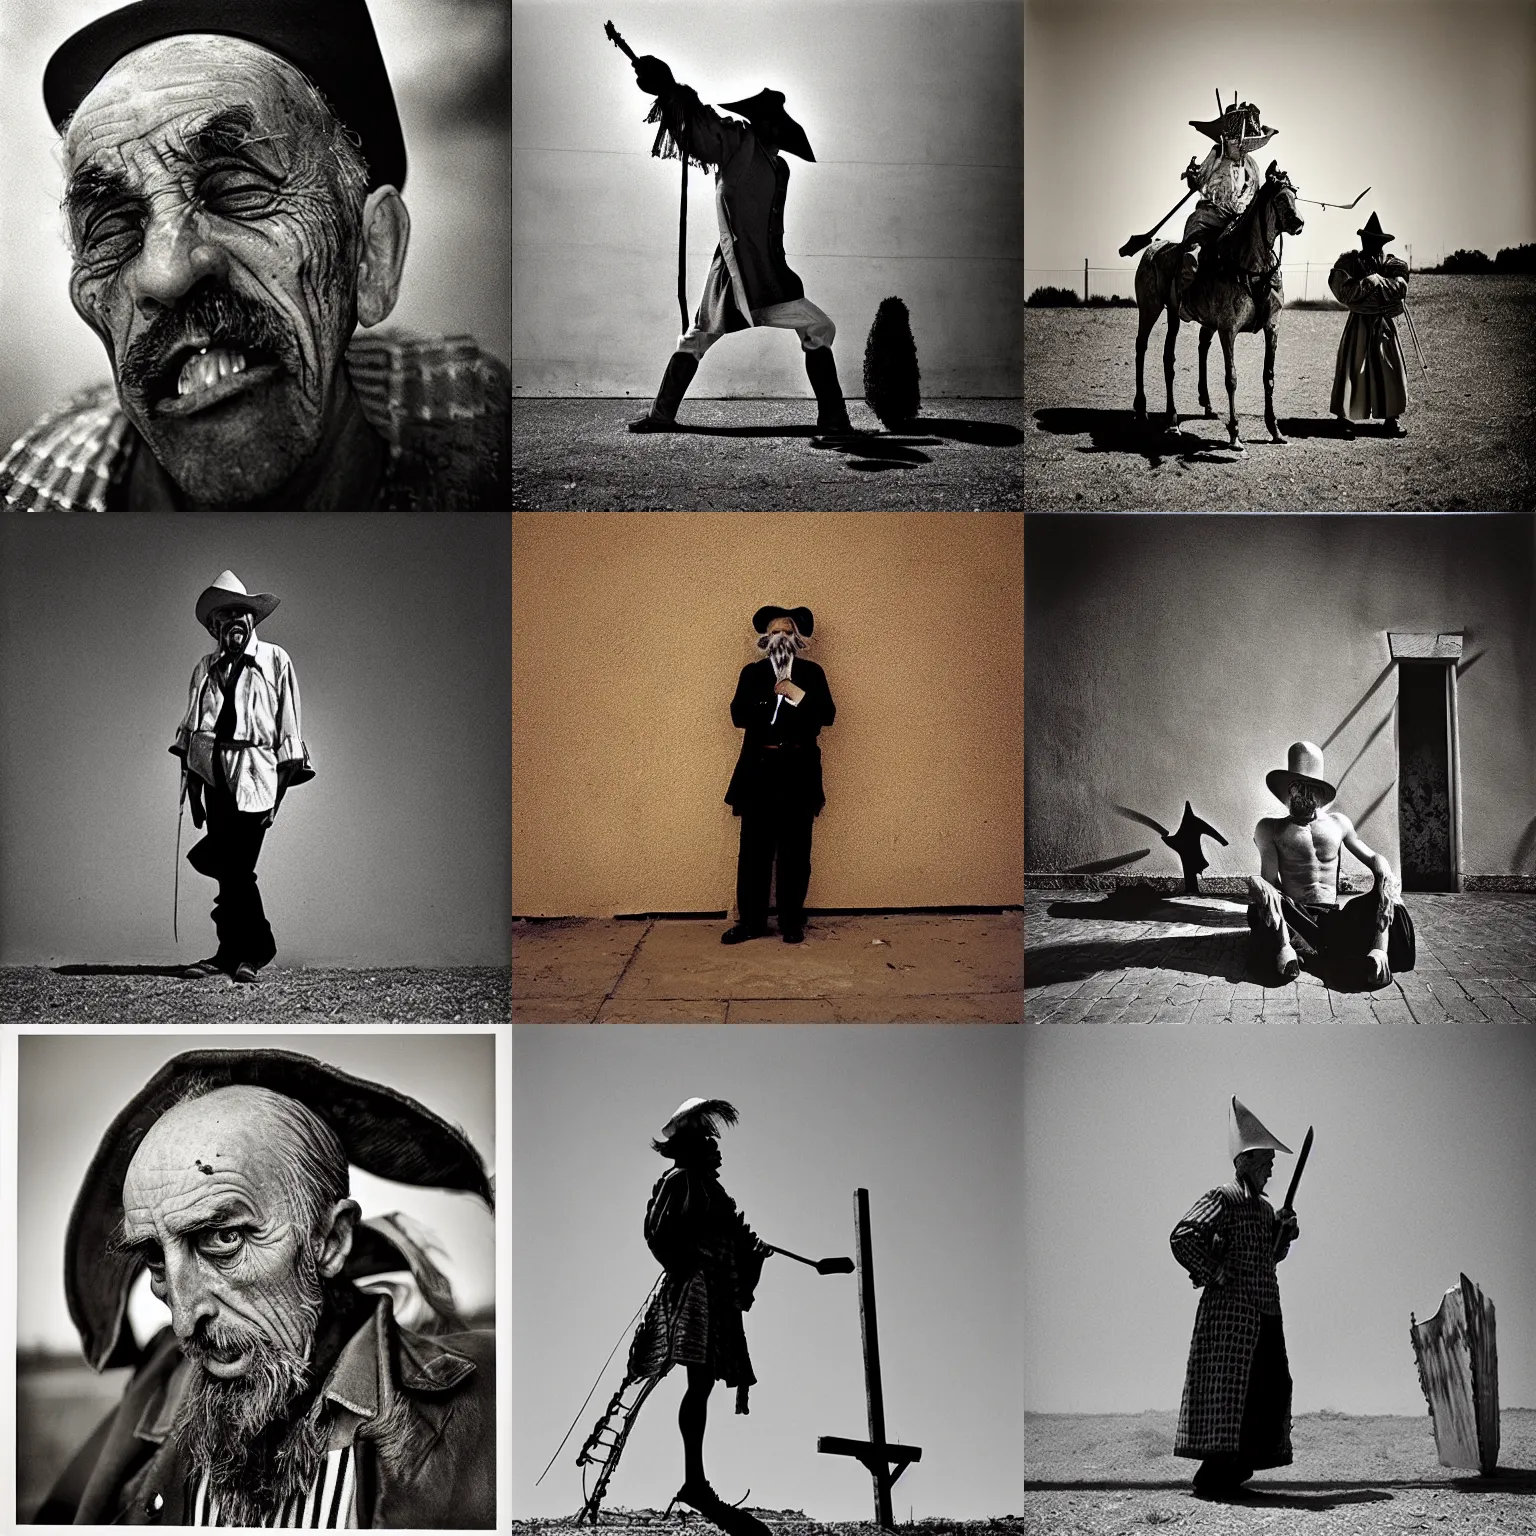 Prompt: “Don Quixote, photo by Bruce Gilden, Magnum photos, award winning”